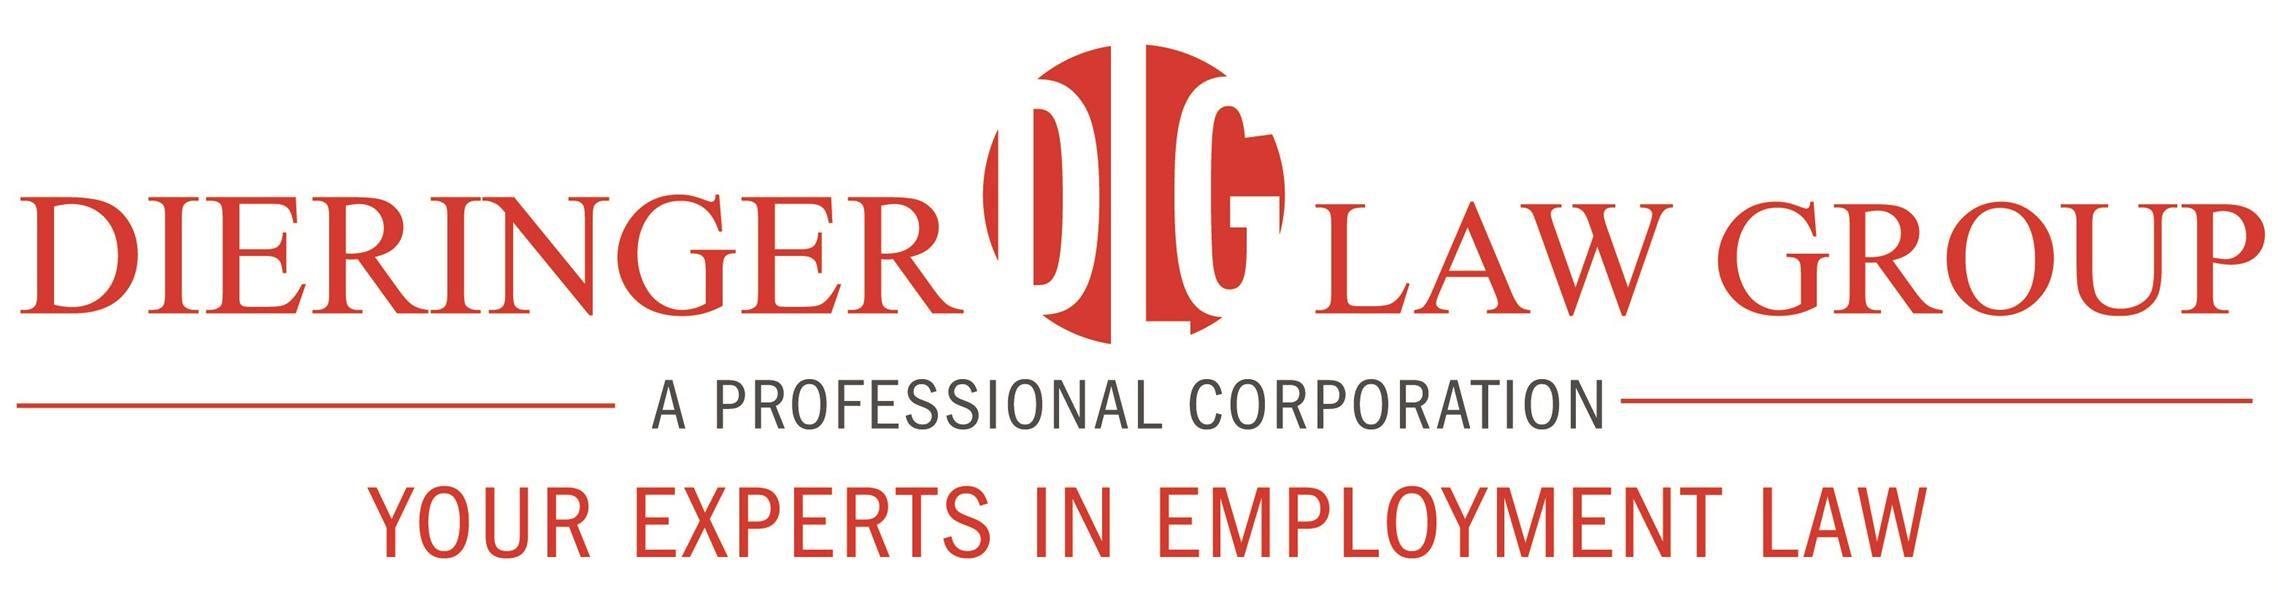 Dieringer Logo - Dieringer Law Group, A Professional Corporation | Legal Services ...